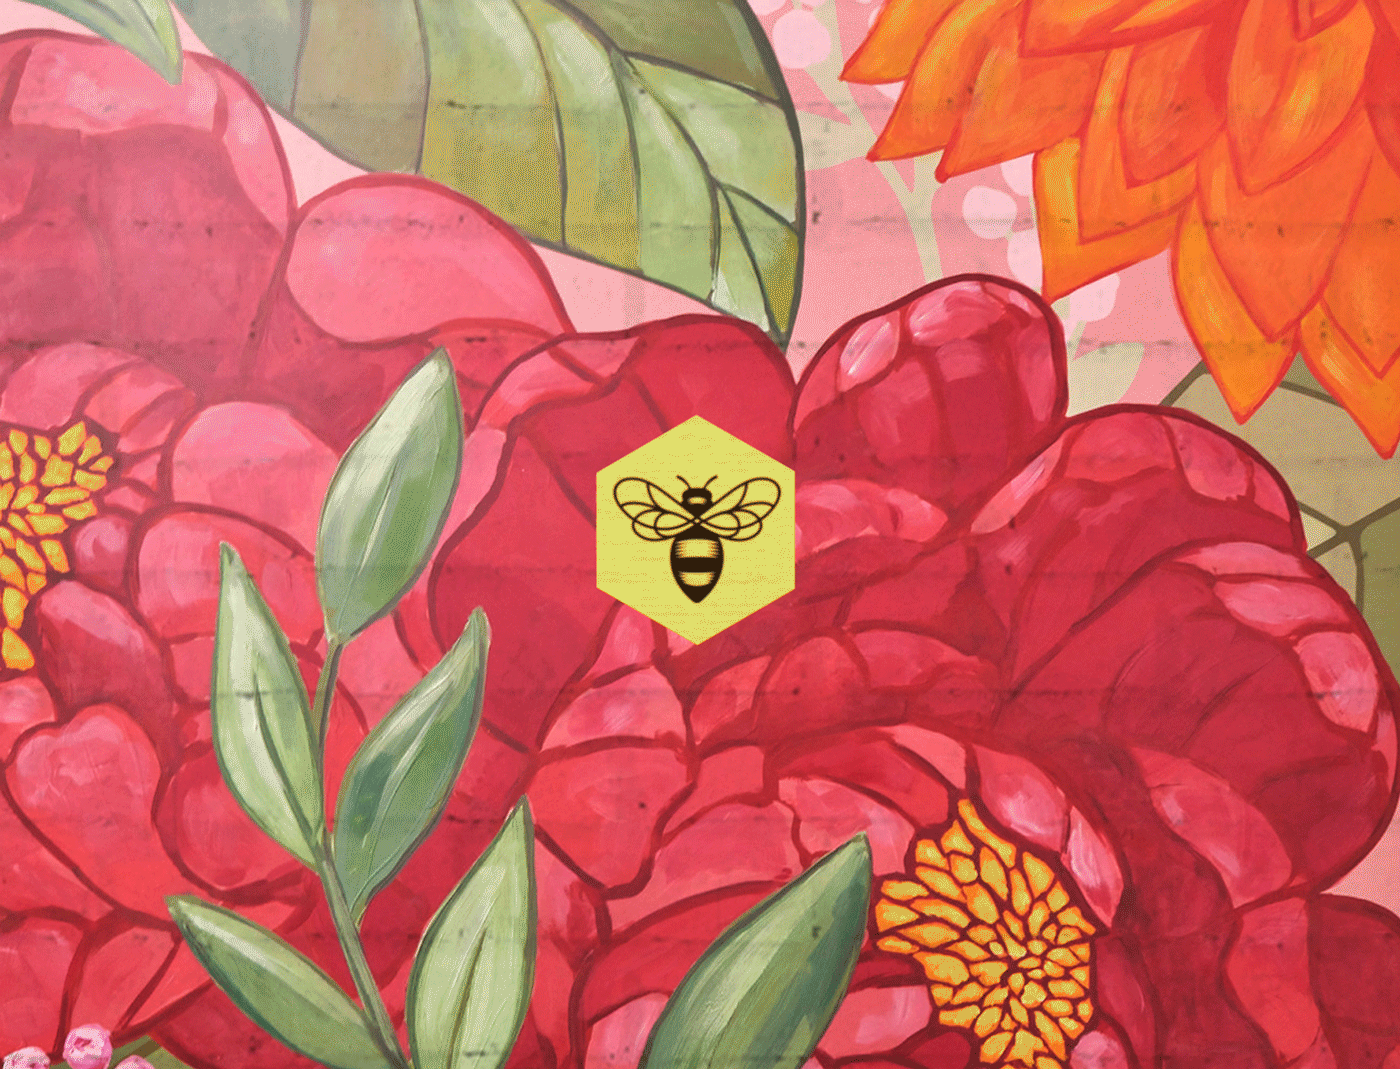 burt's bees commercial art floral Flowers ILLUSTRATION  Mural nature inspired Patterns plants wallpaper